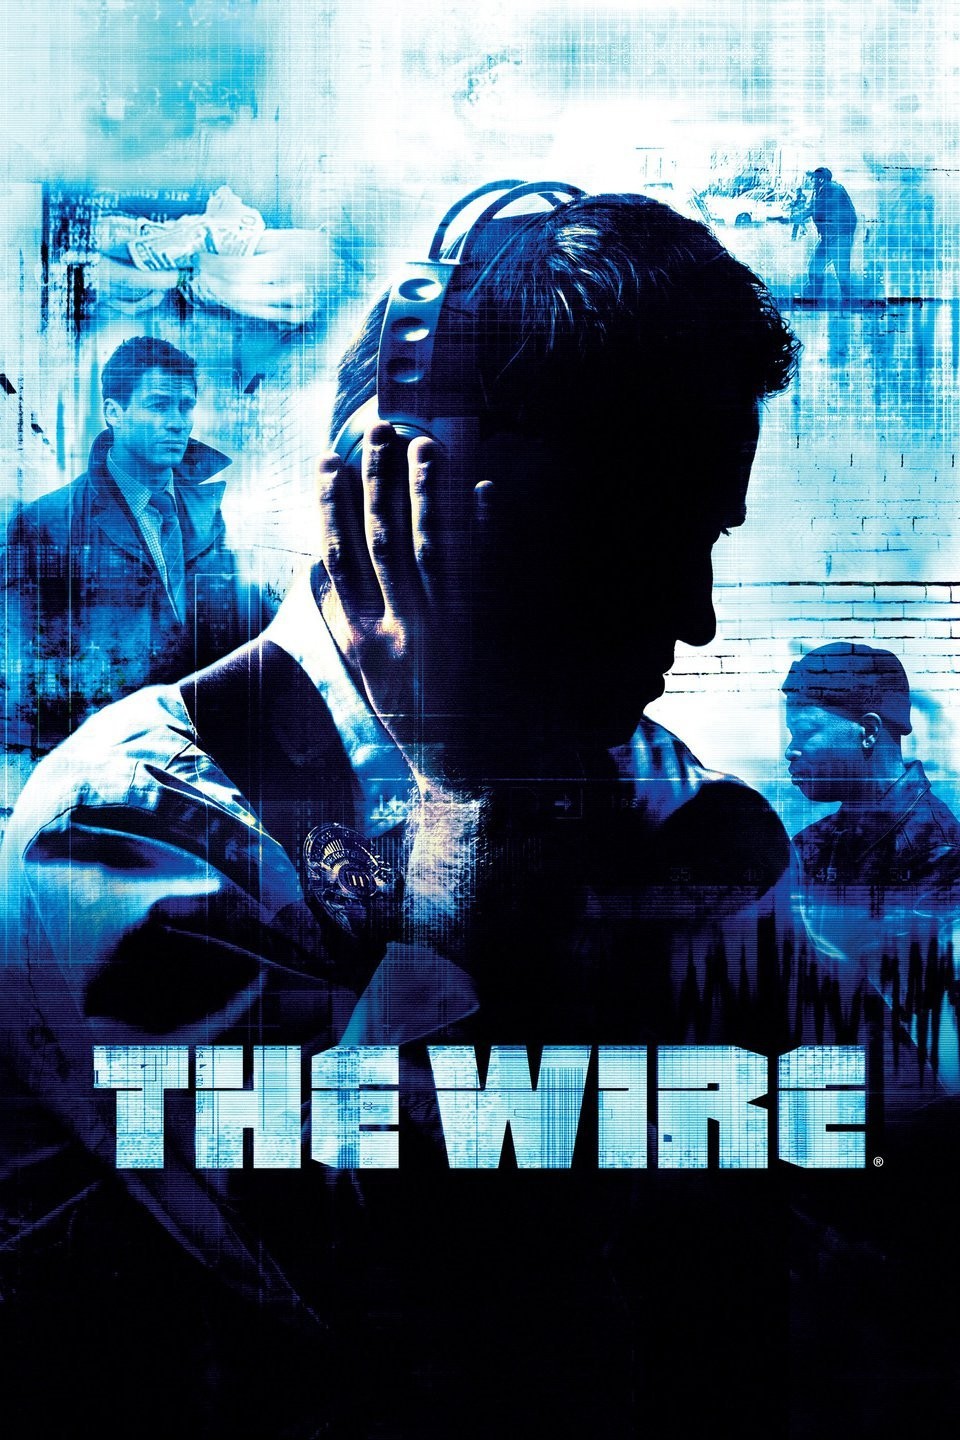 Watch The Wire Season 1